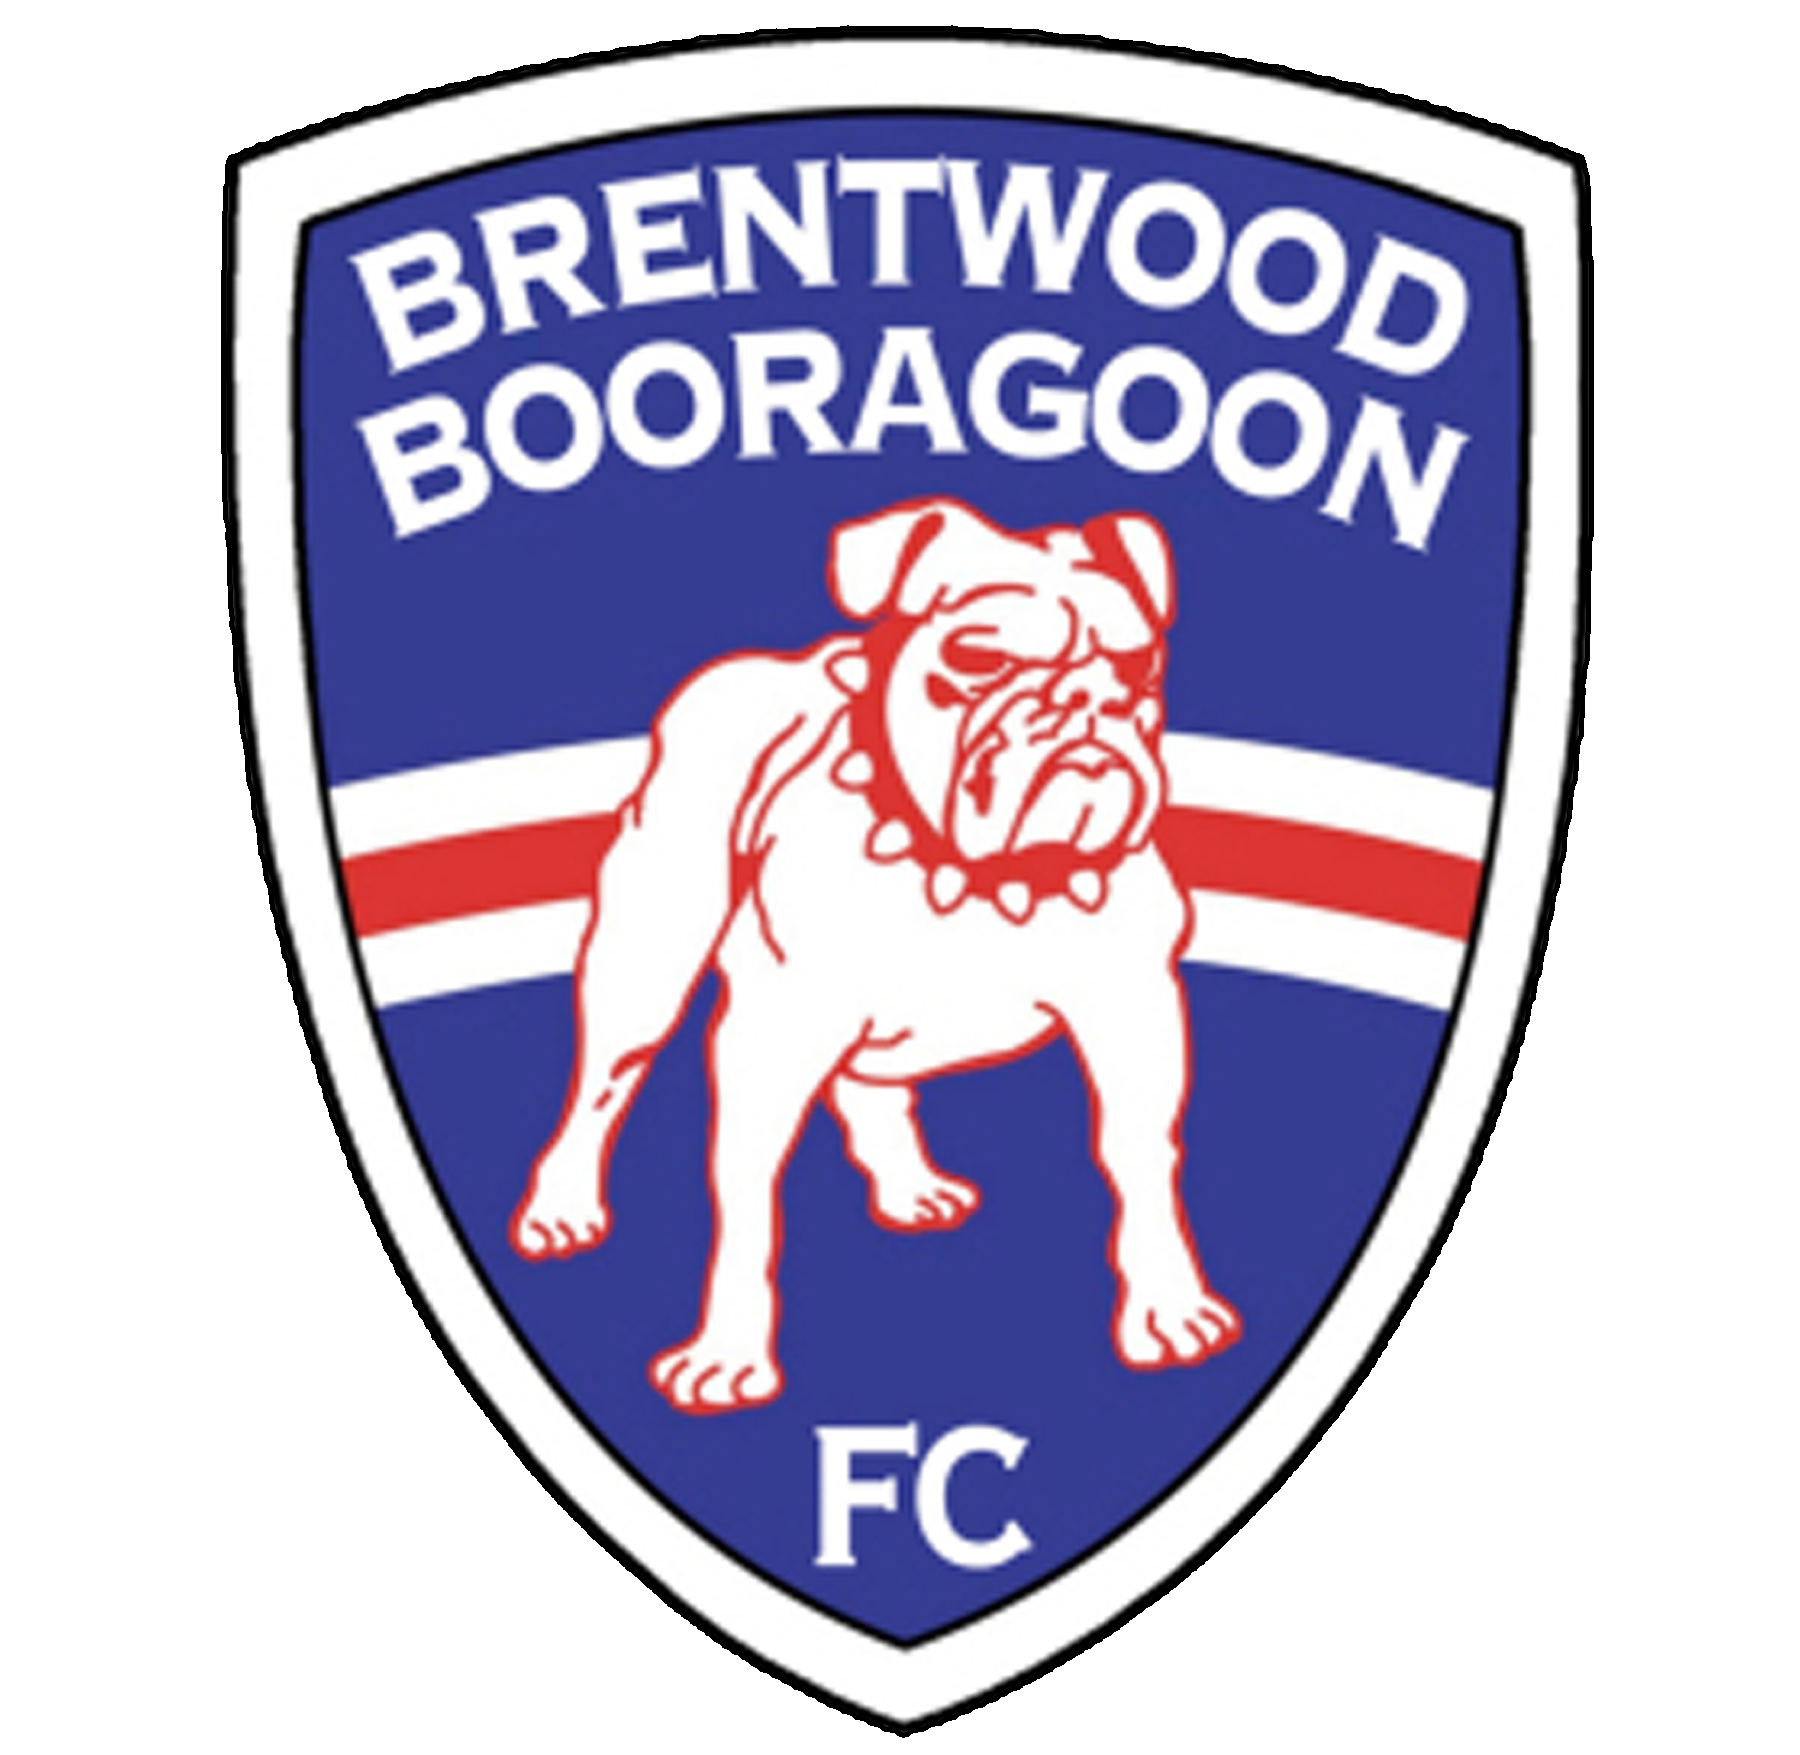 Brentwood Booragoon Football Club